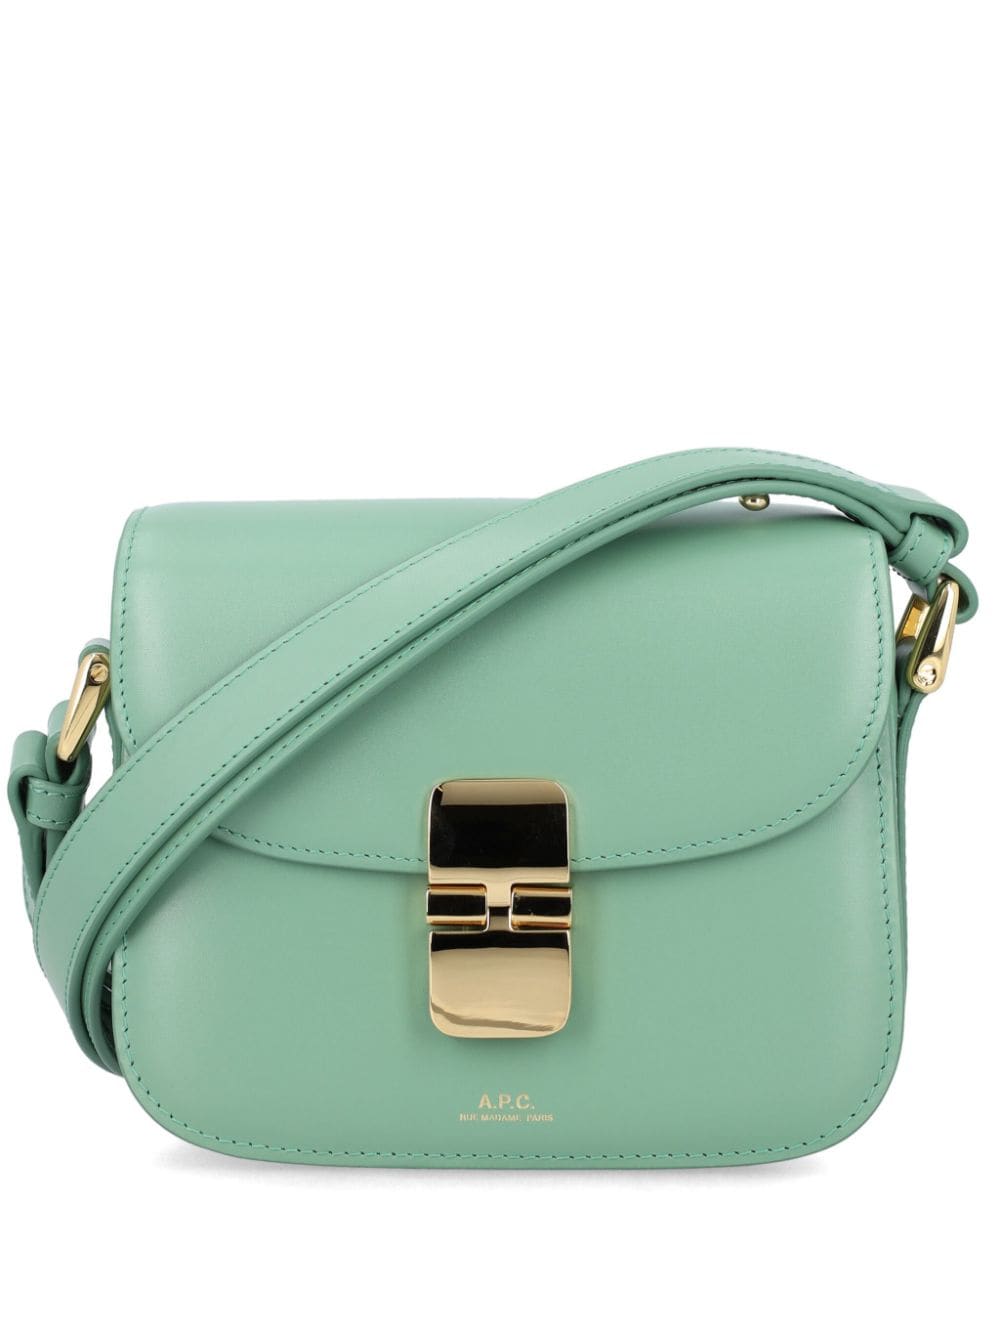 A.P.C. Grace leather mini bag - Green von A.P.C.